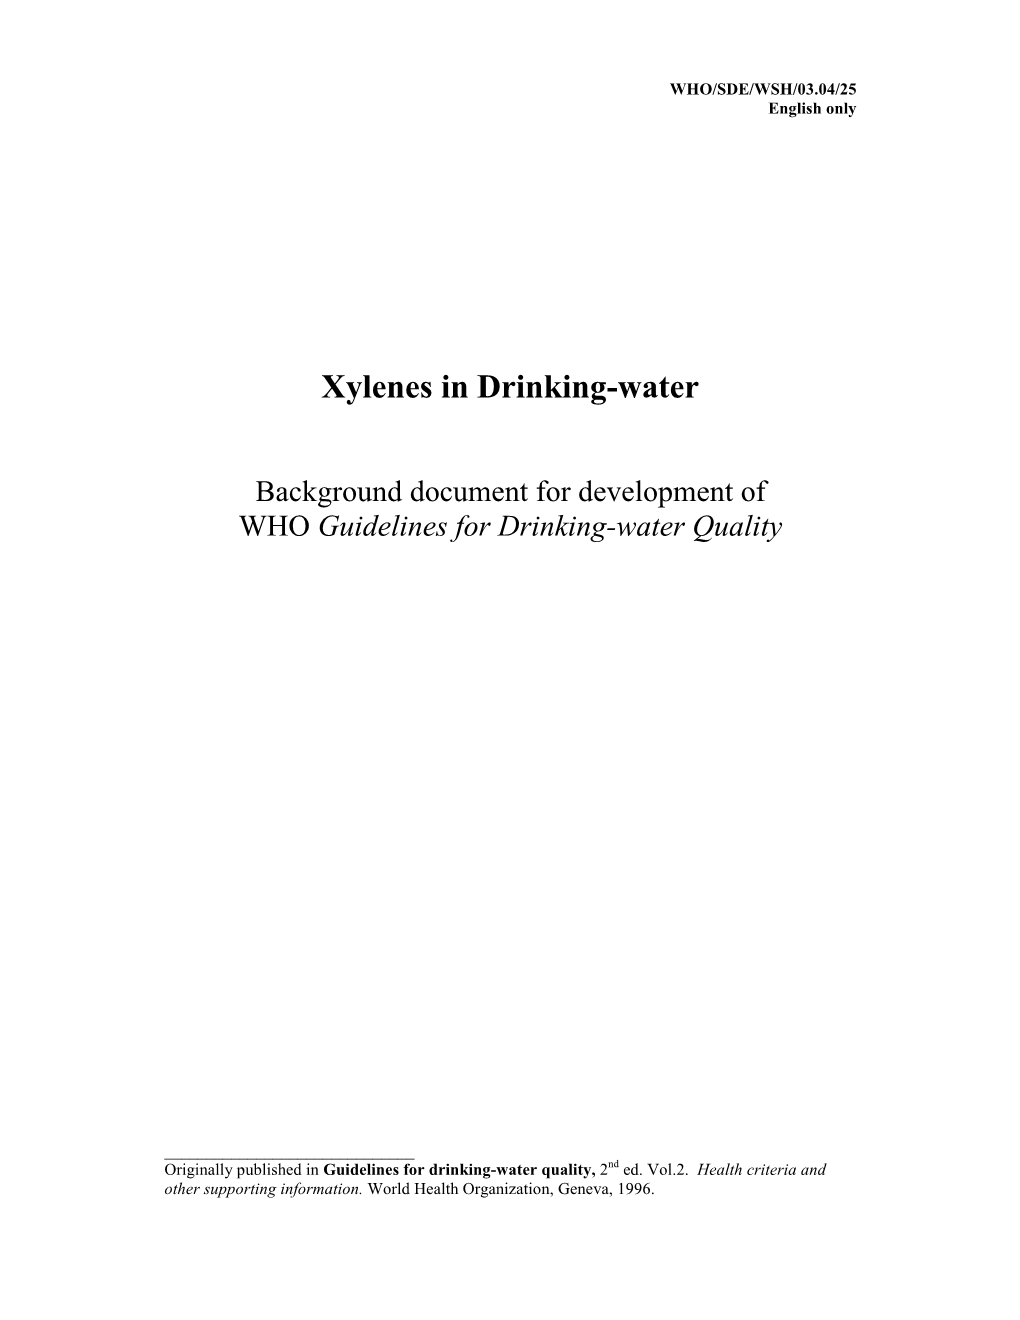 Xylenes in Drinking-Water